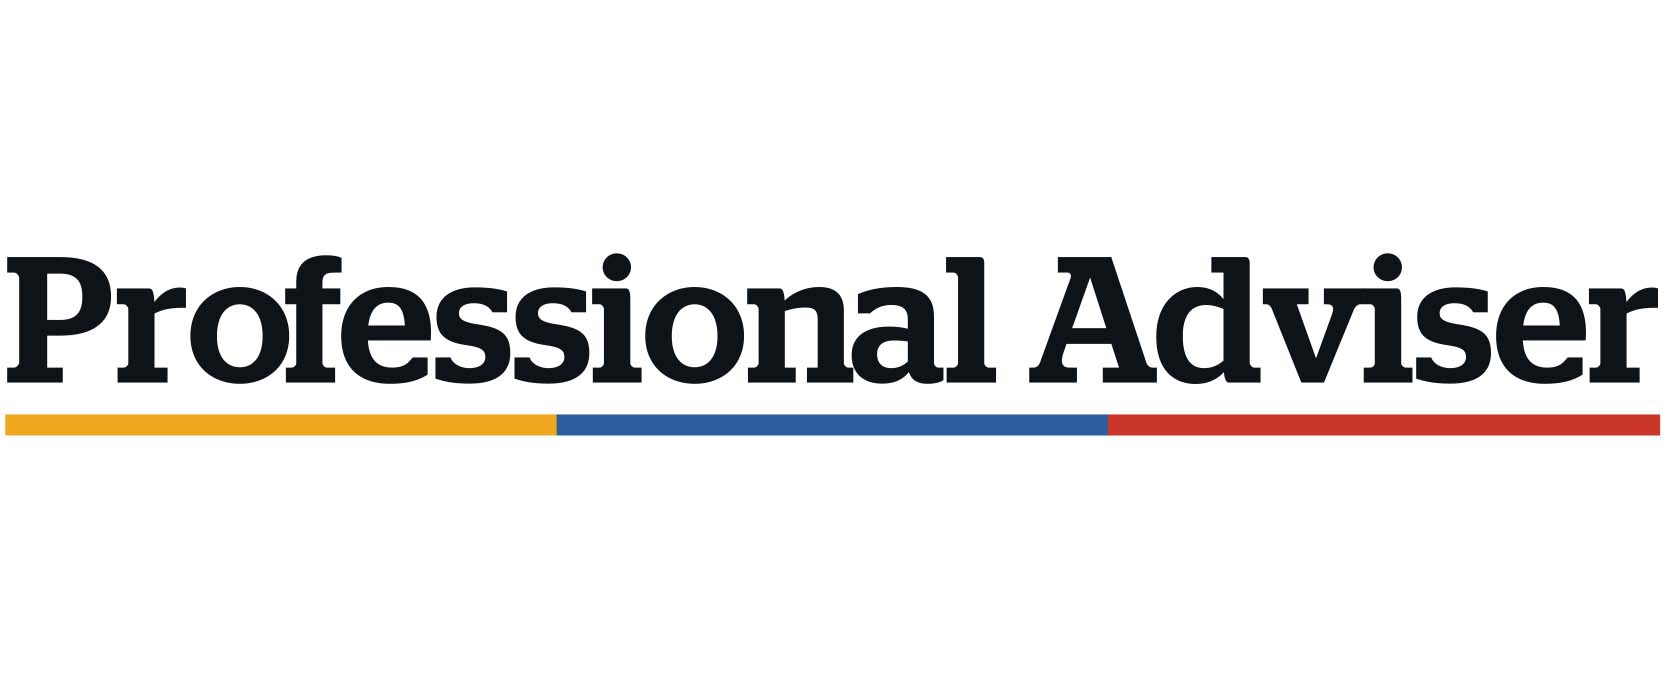 Professional Adviser logo